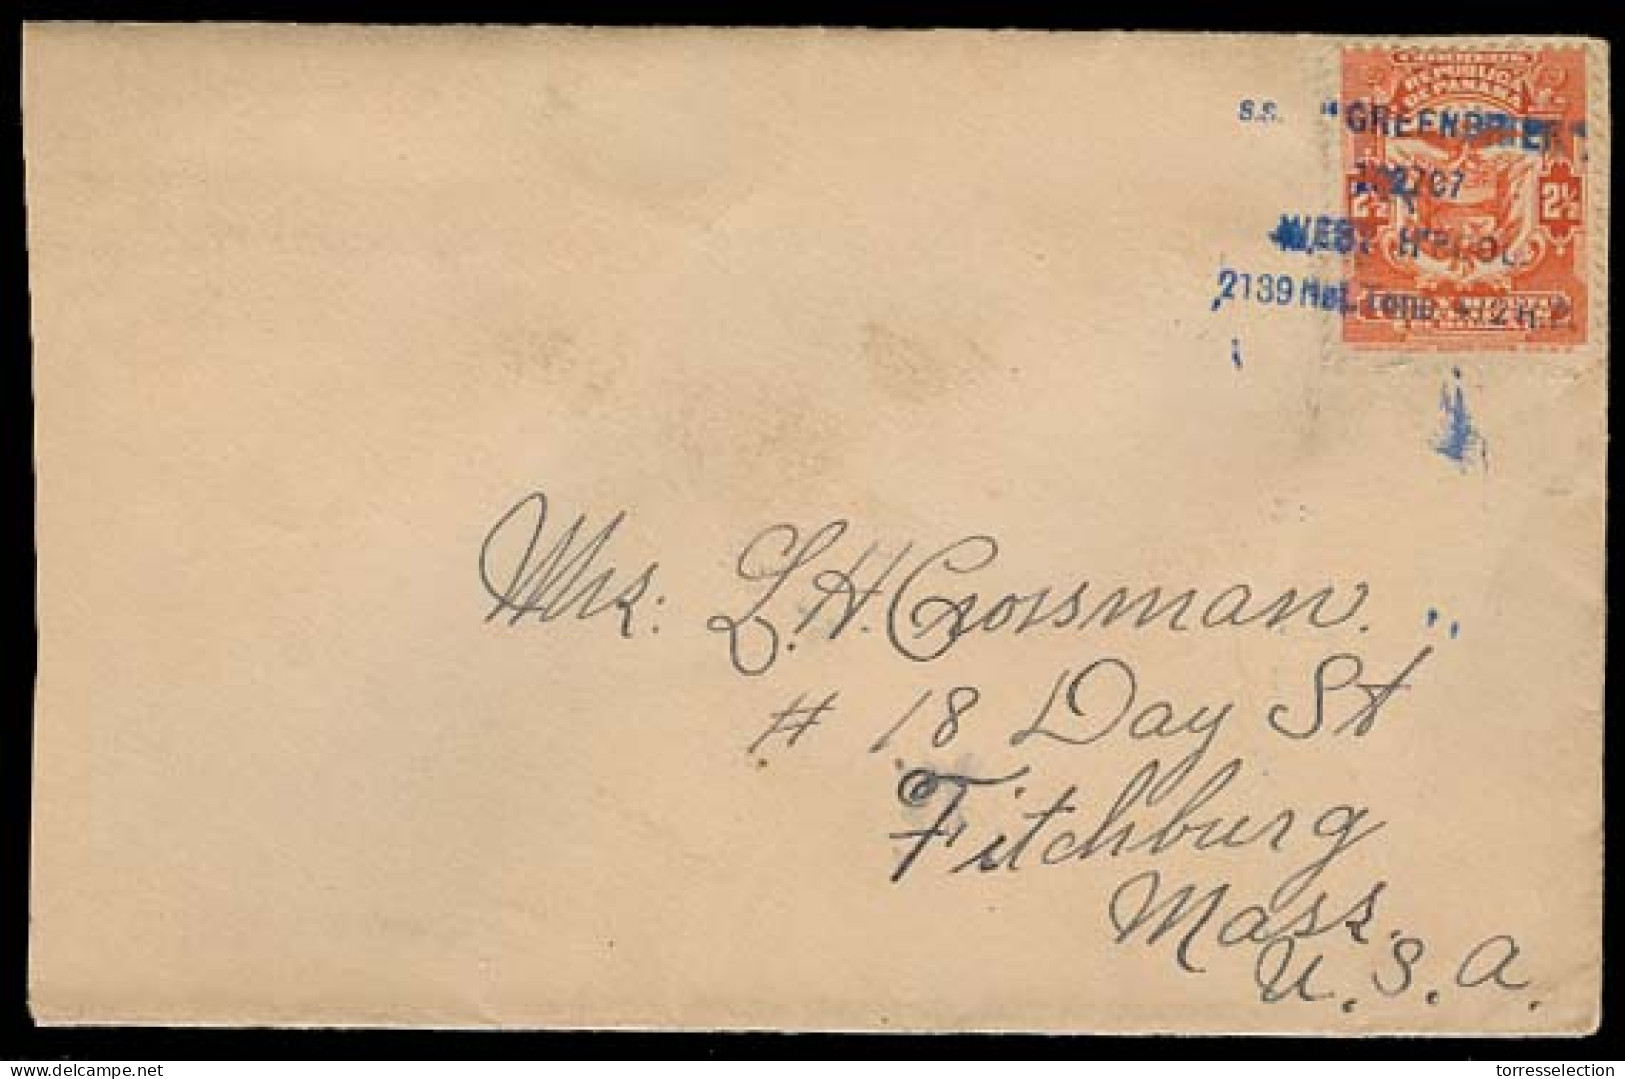 PANAMA. C.1910. Panama - USA. Fkd Env Pqbt Blue Cancel. "SS Greenberg / West Hpool / 2139 Net Tons". VF. - Panamá